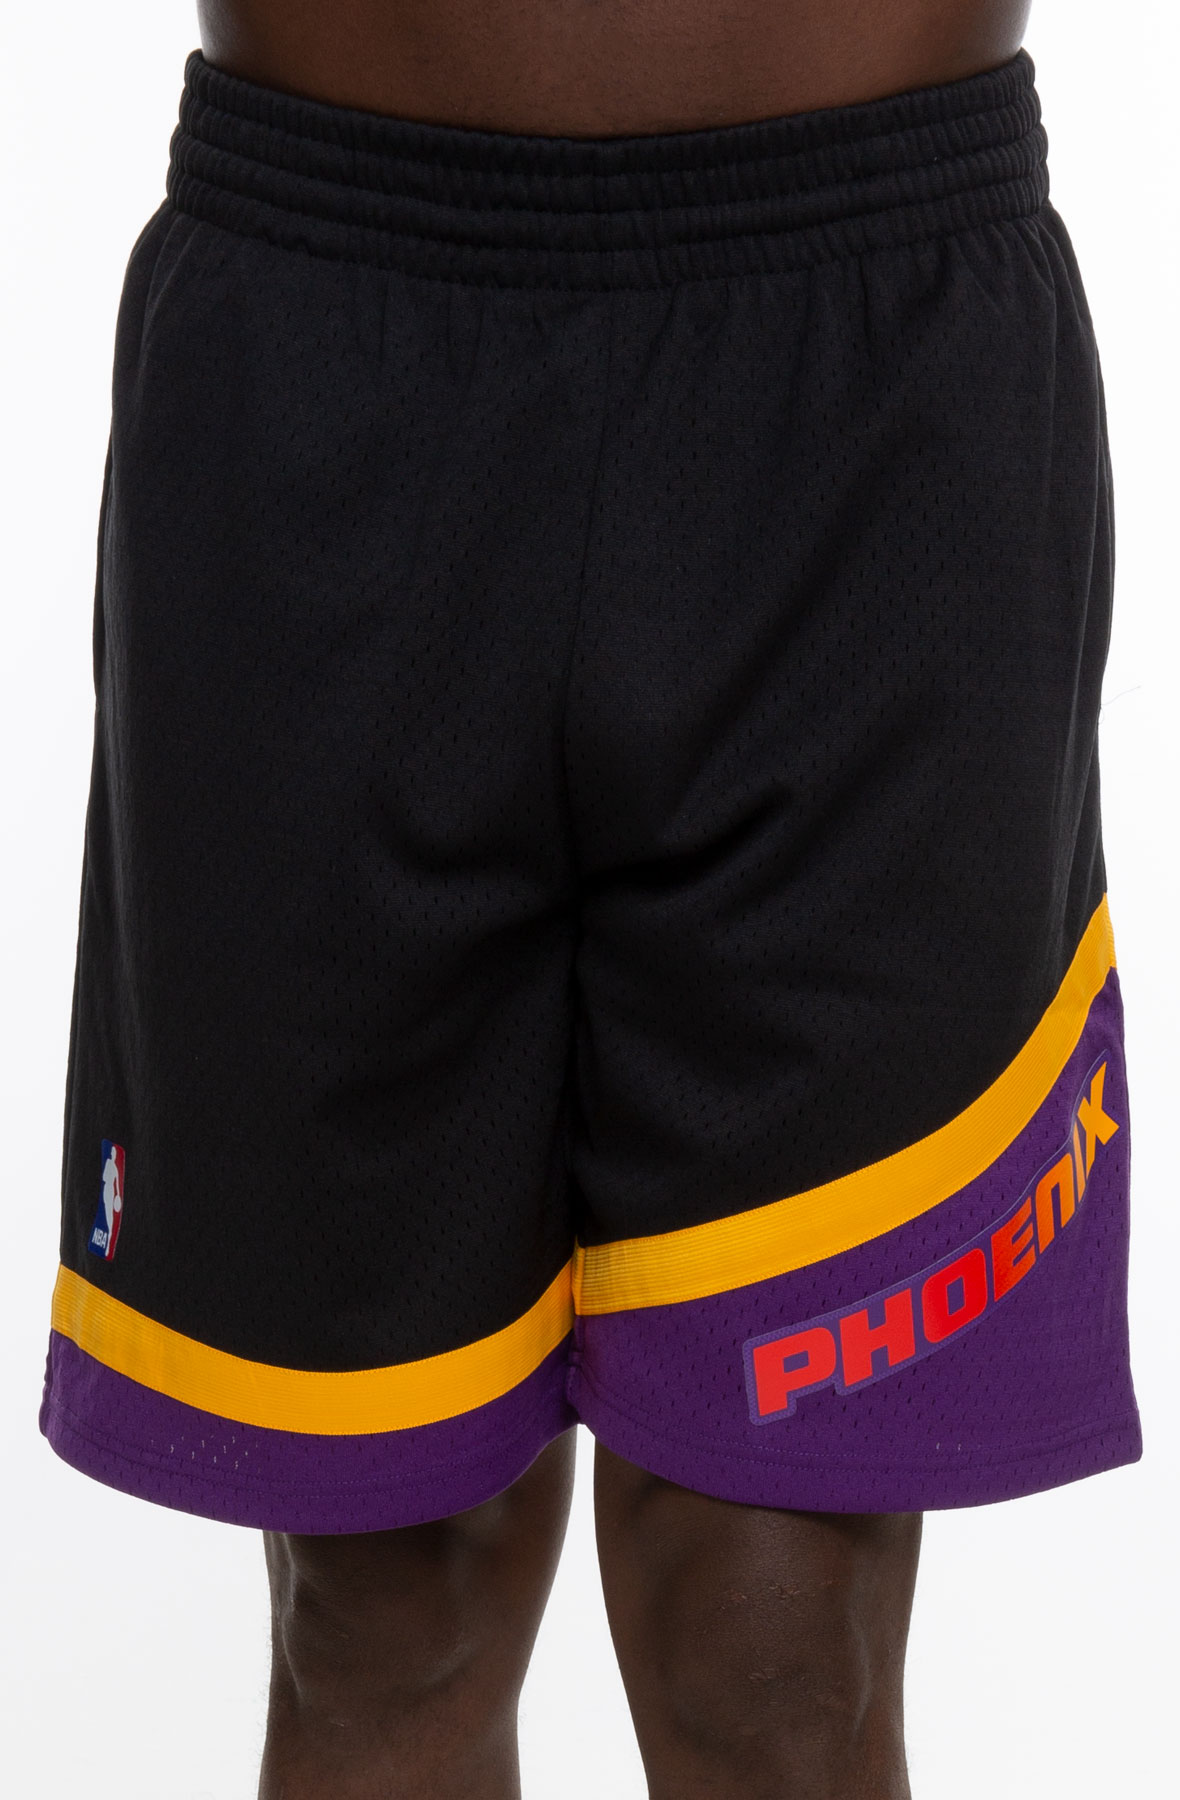 Phoenix Suns Shorts : Get the best deal for phoenix suns orange nba ...